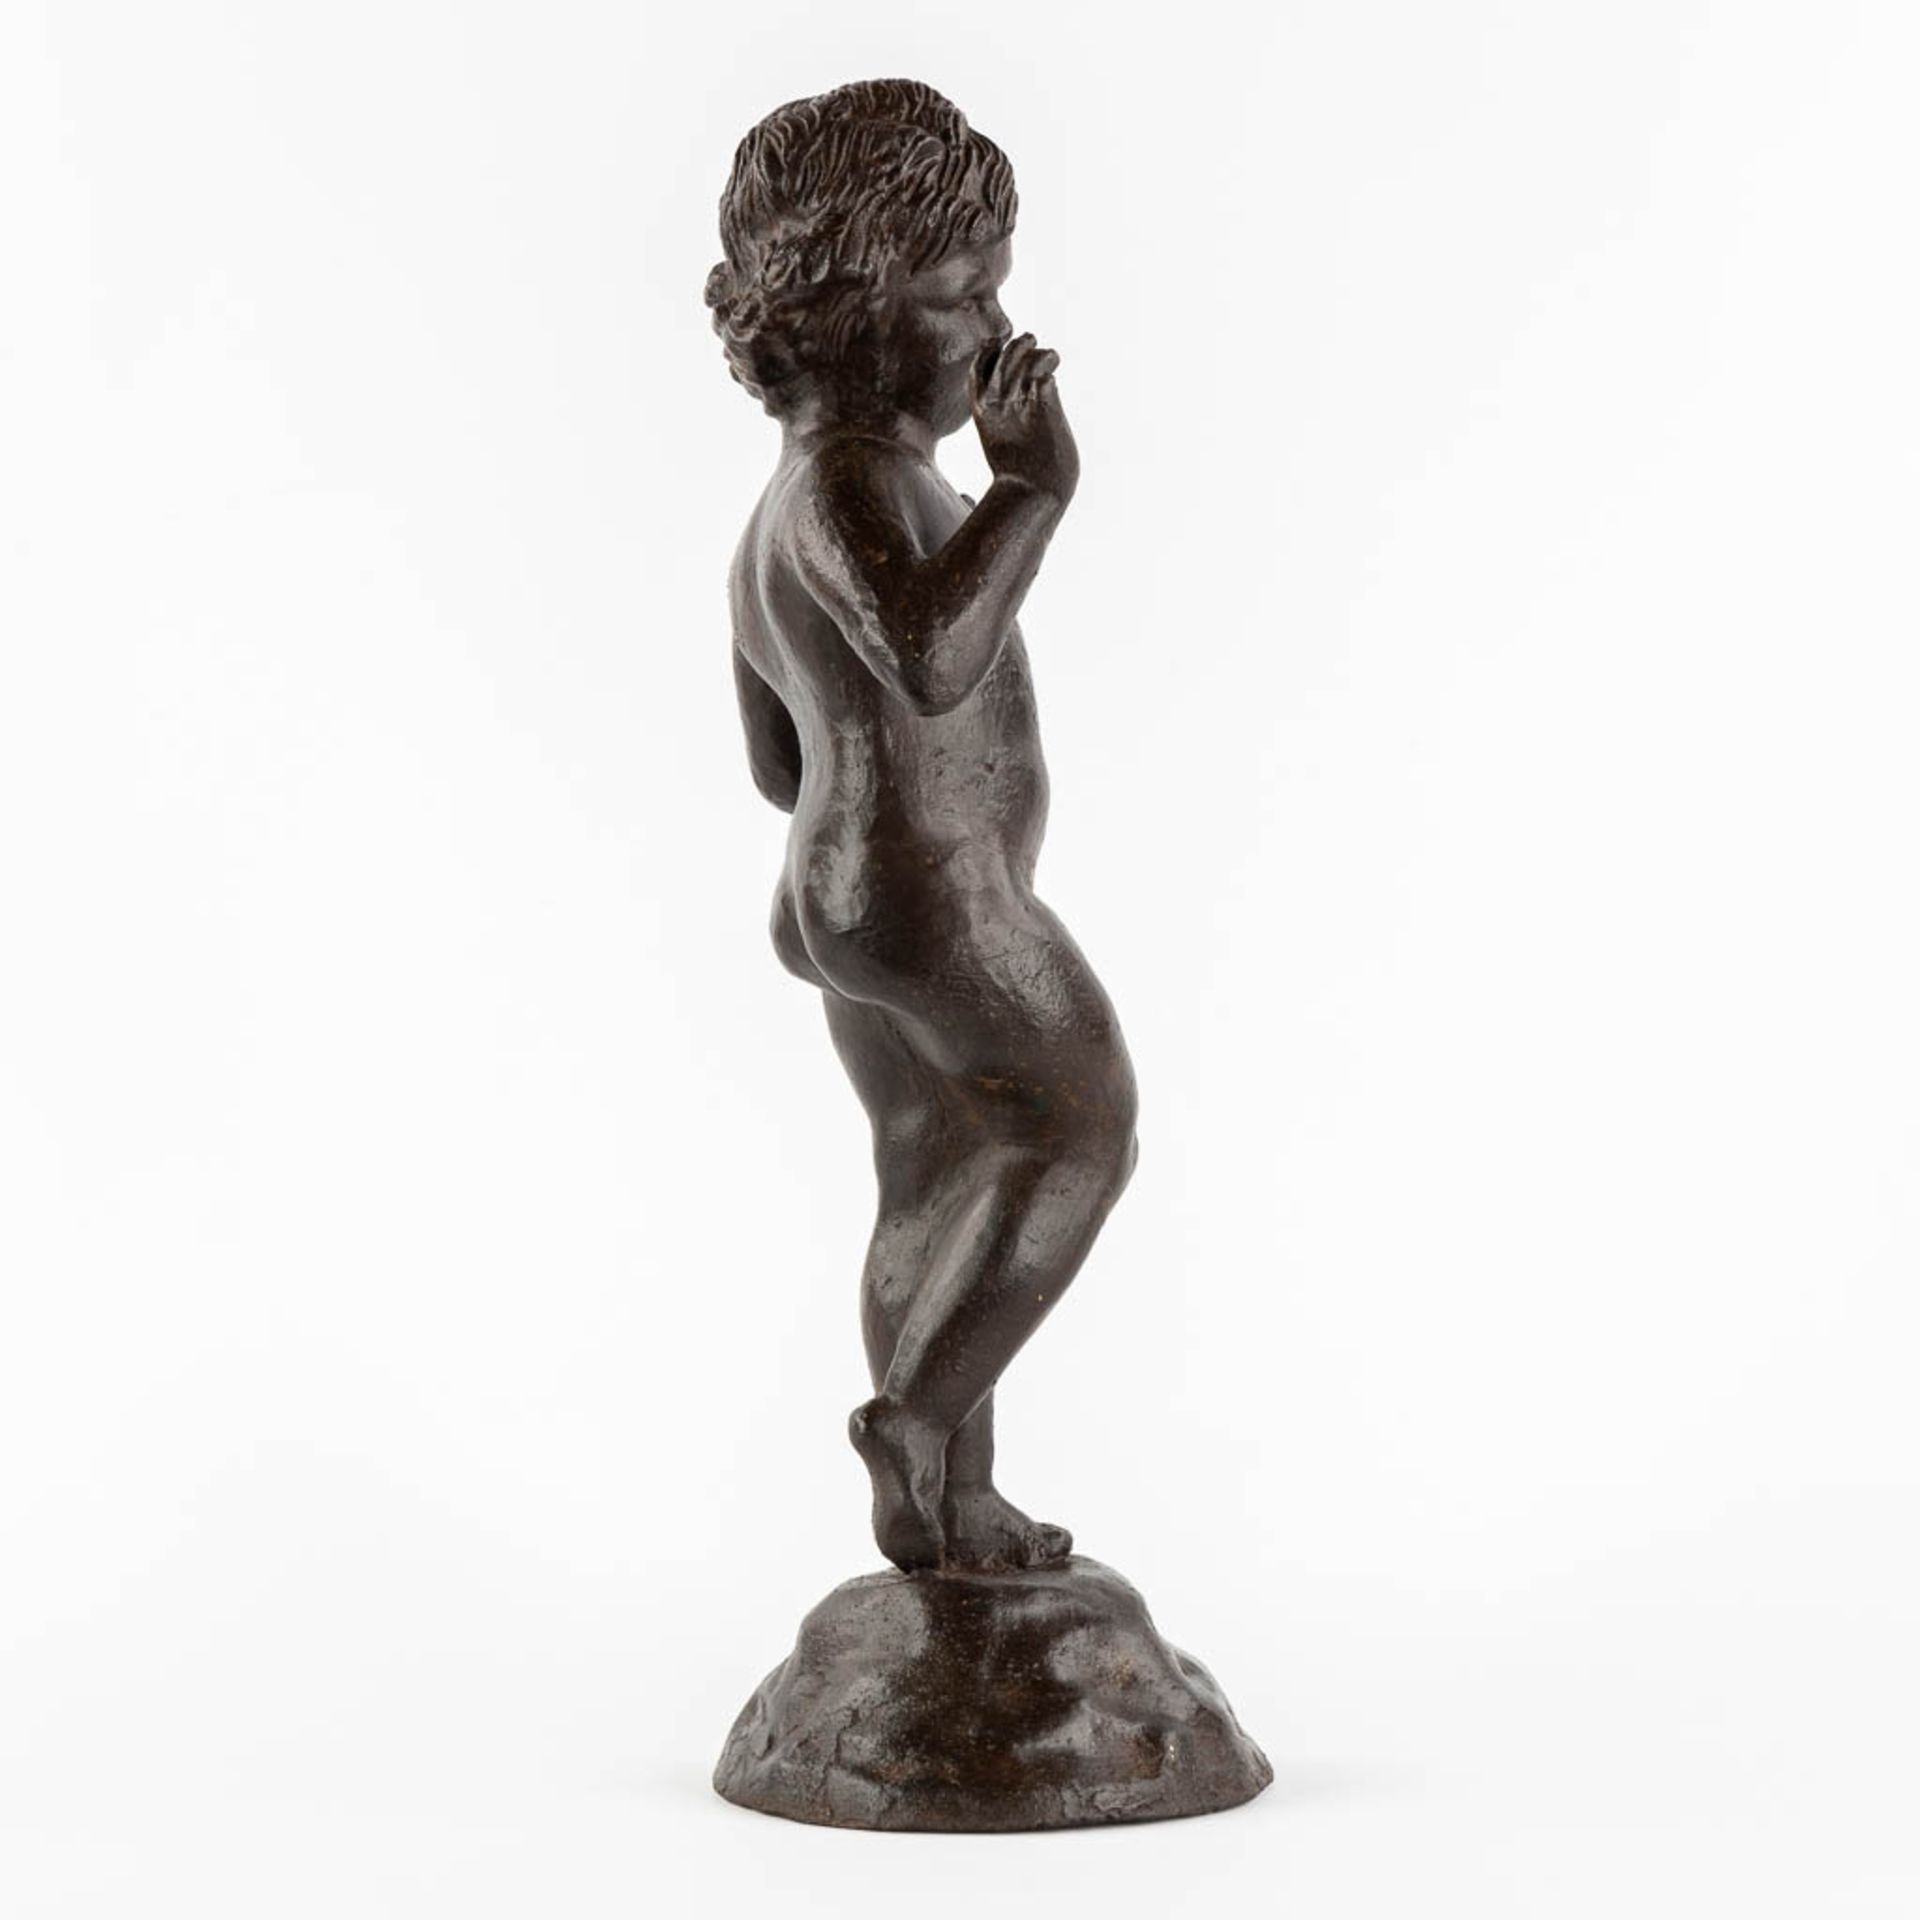 Figurine of a boy, cast-iron. (W:17 x H:53 cm) - Image 4 of 8